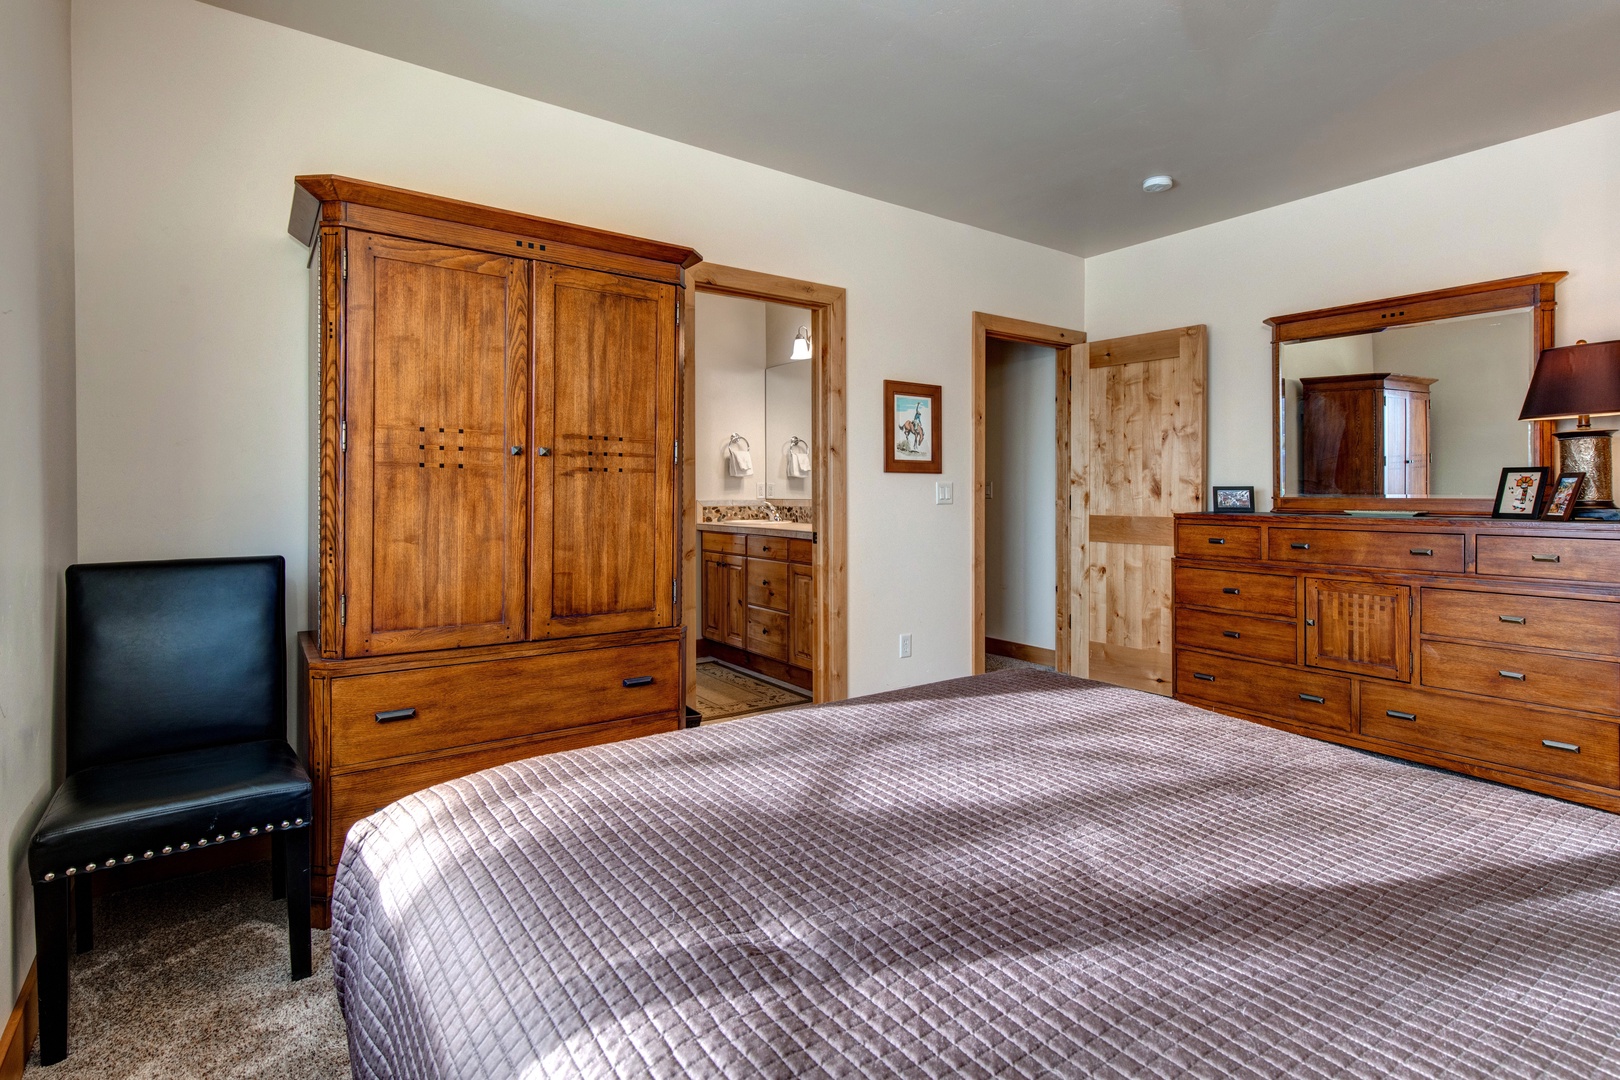 Park City Vacation Rentals, Cedar Ridge Townhouse - Downstairs bedroom